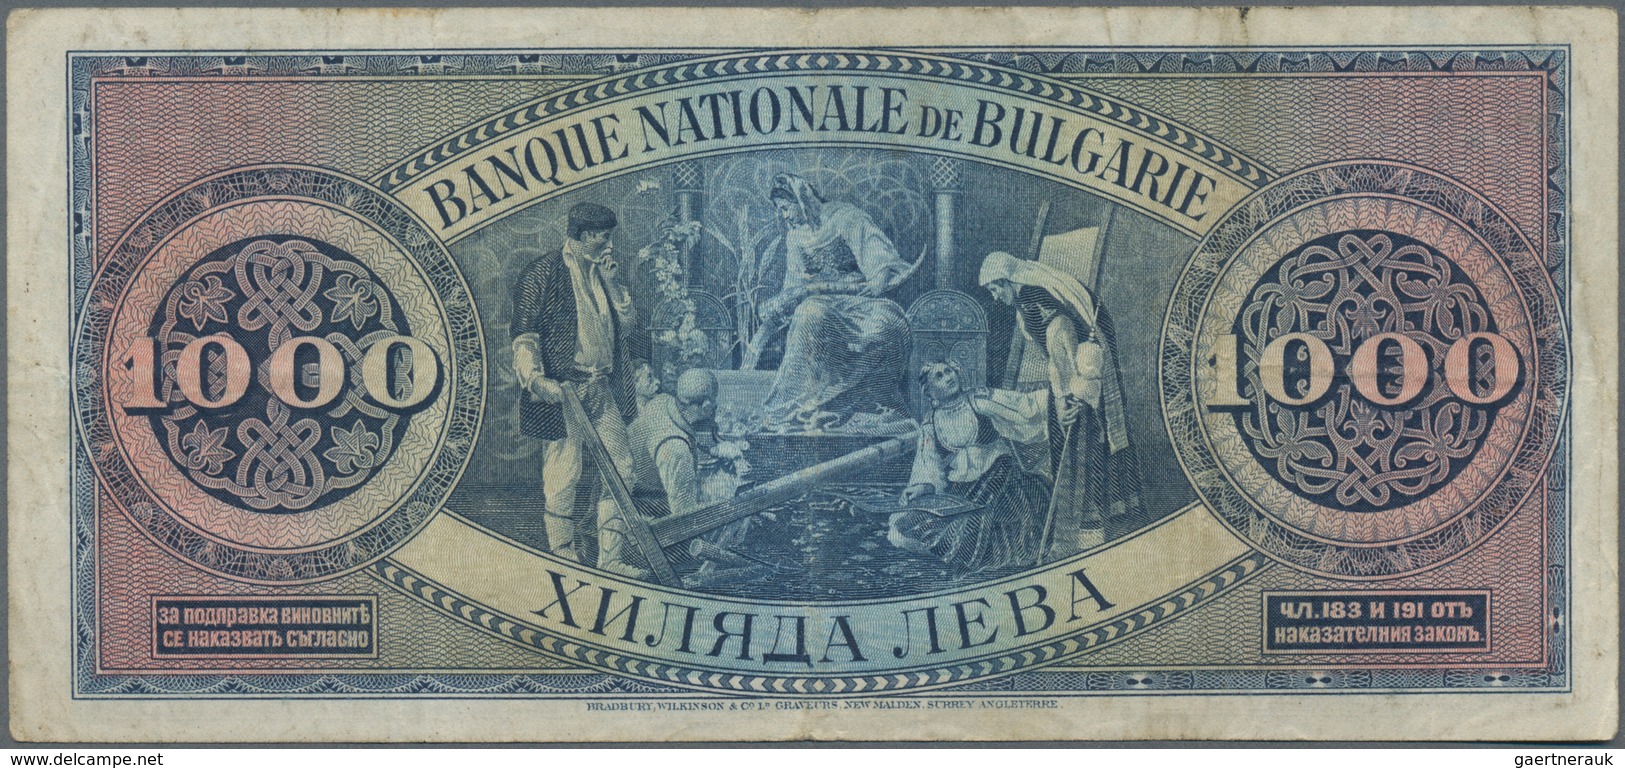 Bulgaria / Bulgarien: 1000 Leva 1925, P.48, Nice Original Shape With Several Folds And Lightly Toned - Bulgarien